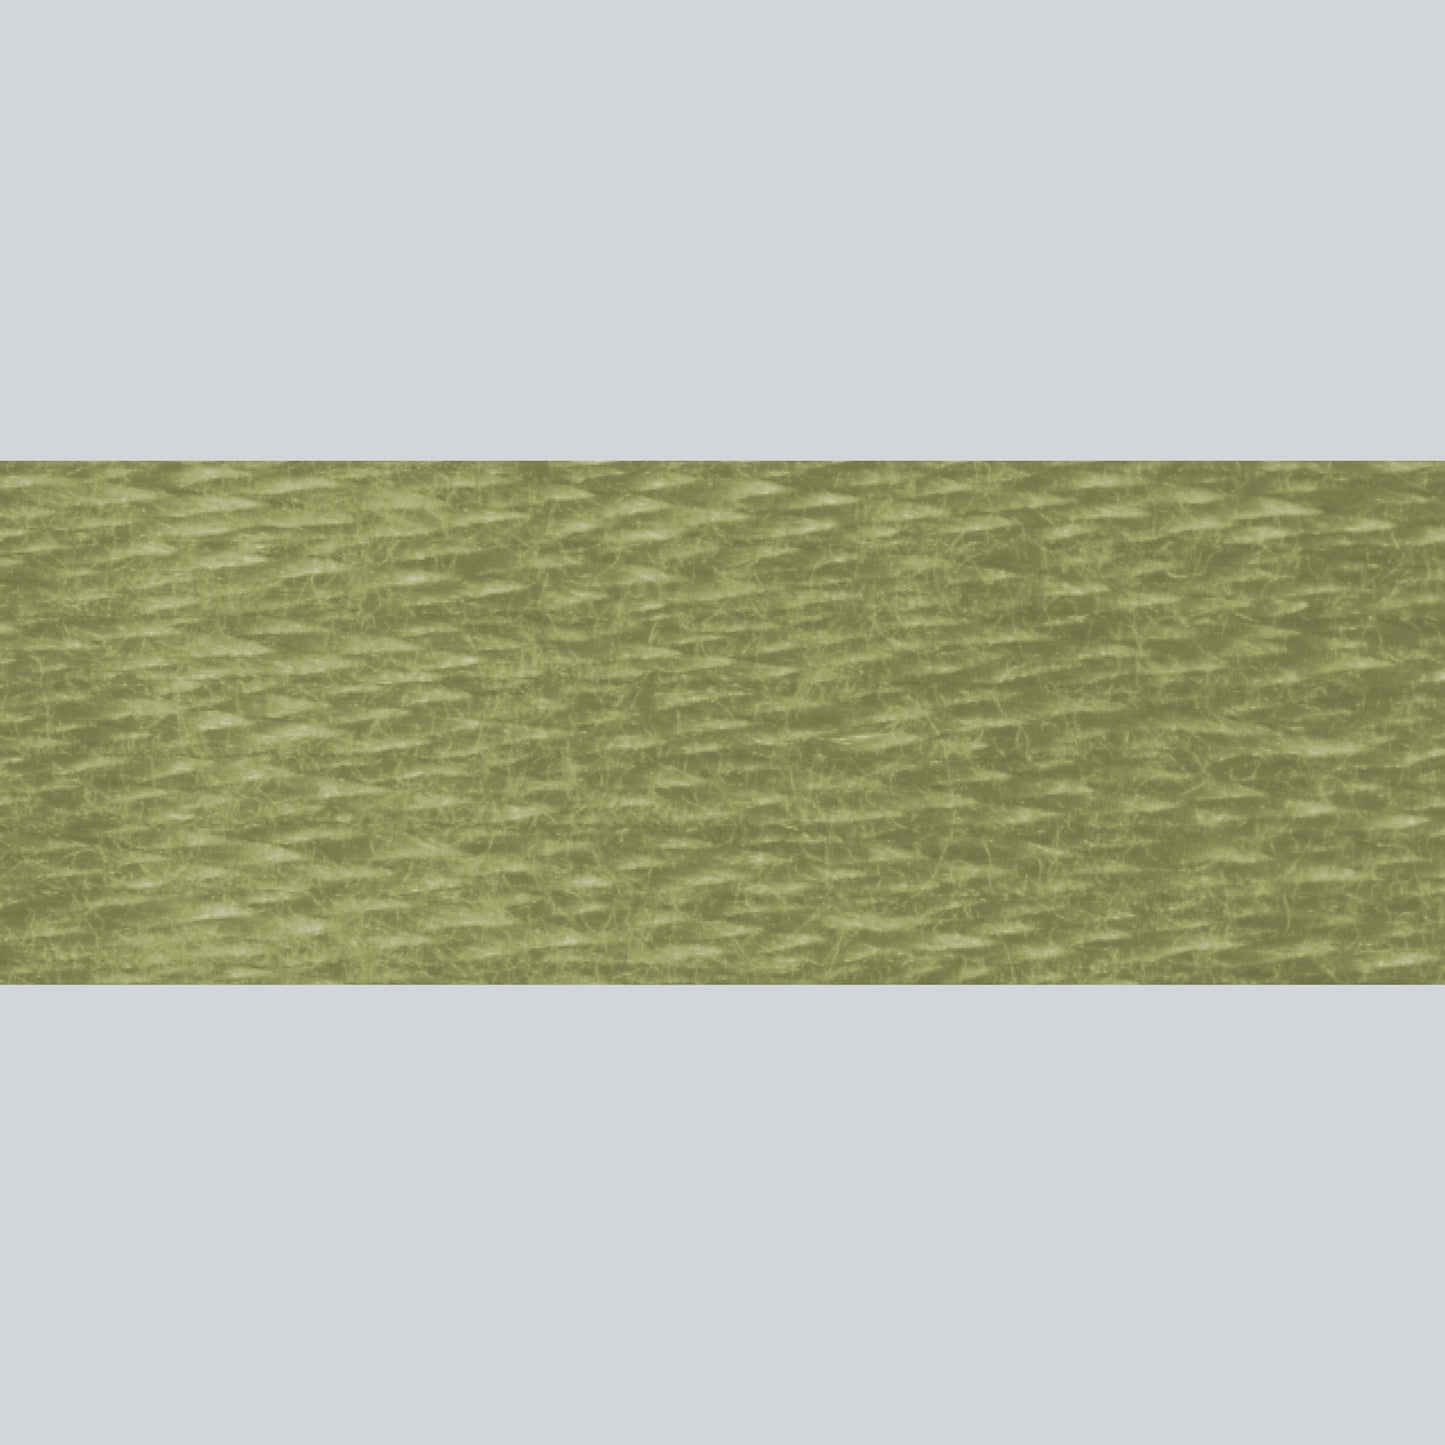 DMC Embroidery Floss - 3012 Medium Khaki Green Alternative View #1